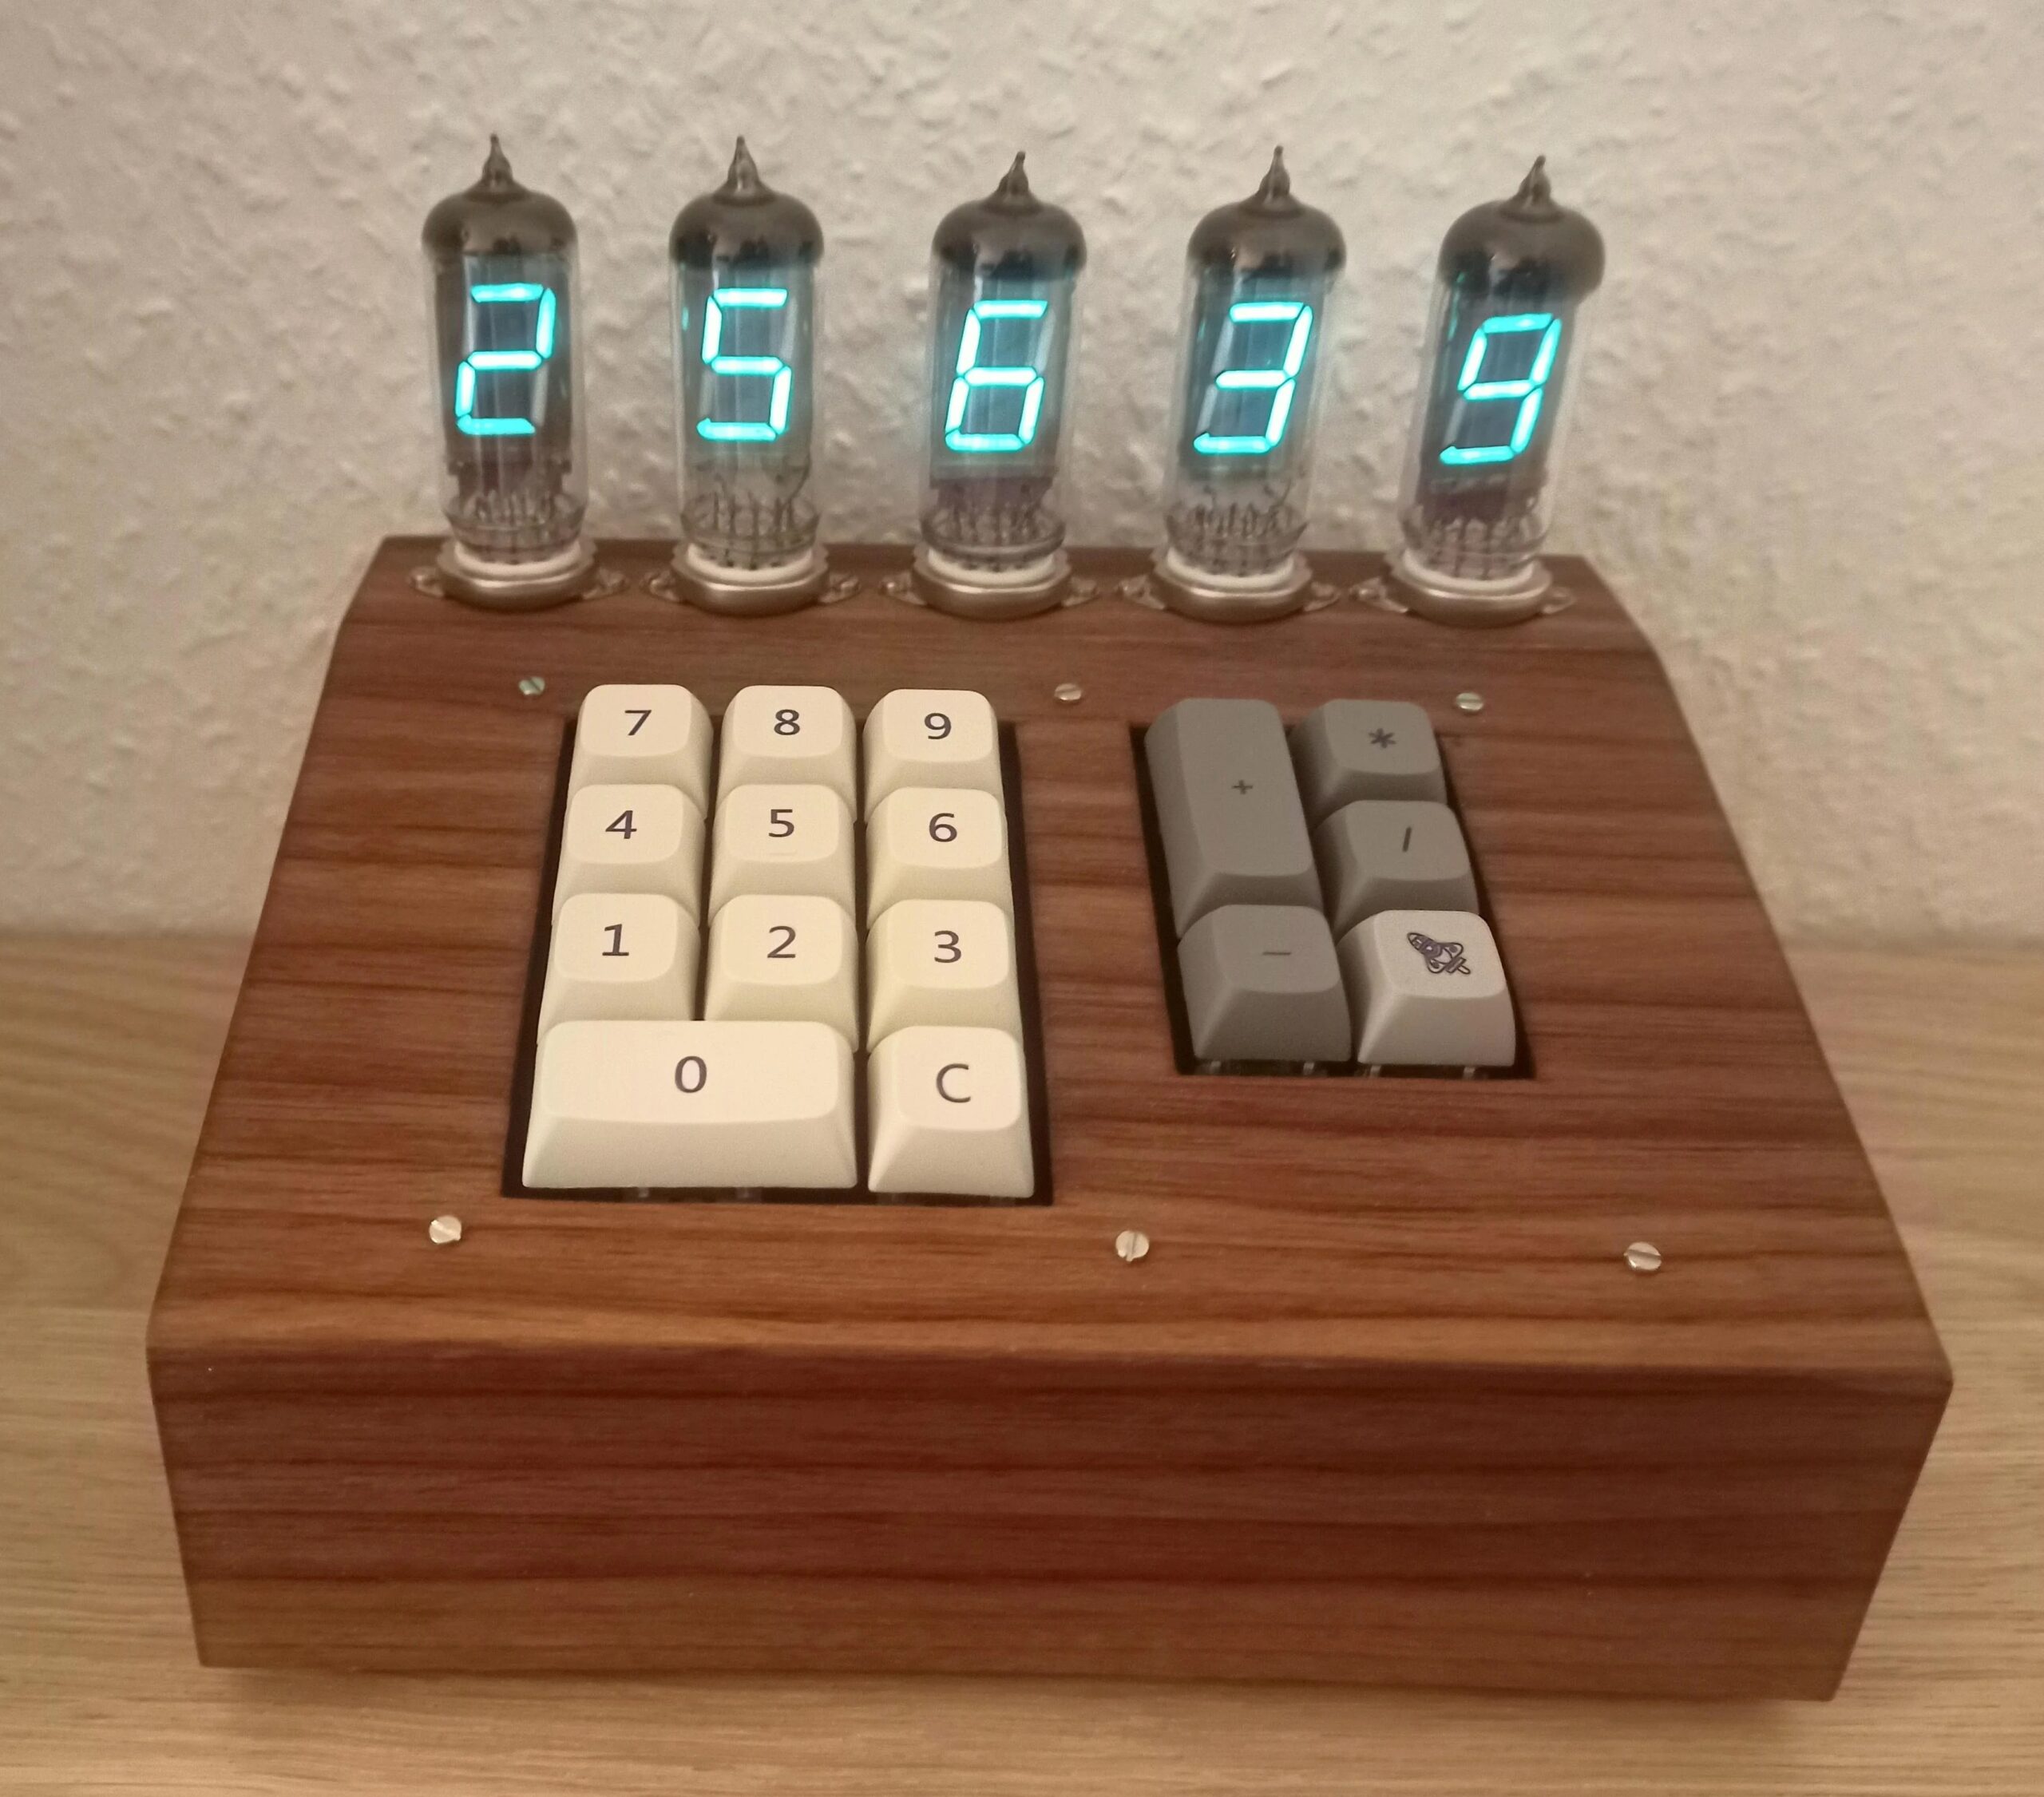 A beautiful custom calculator built with IV-12 VFD tubes